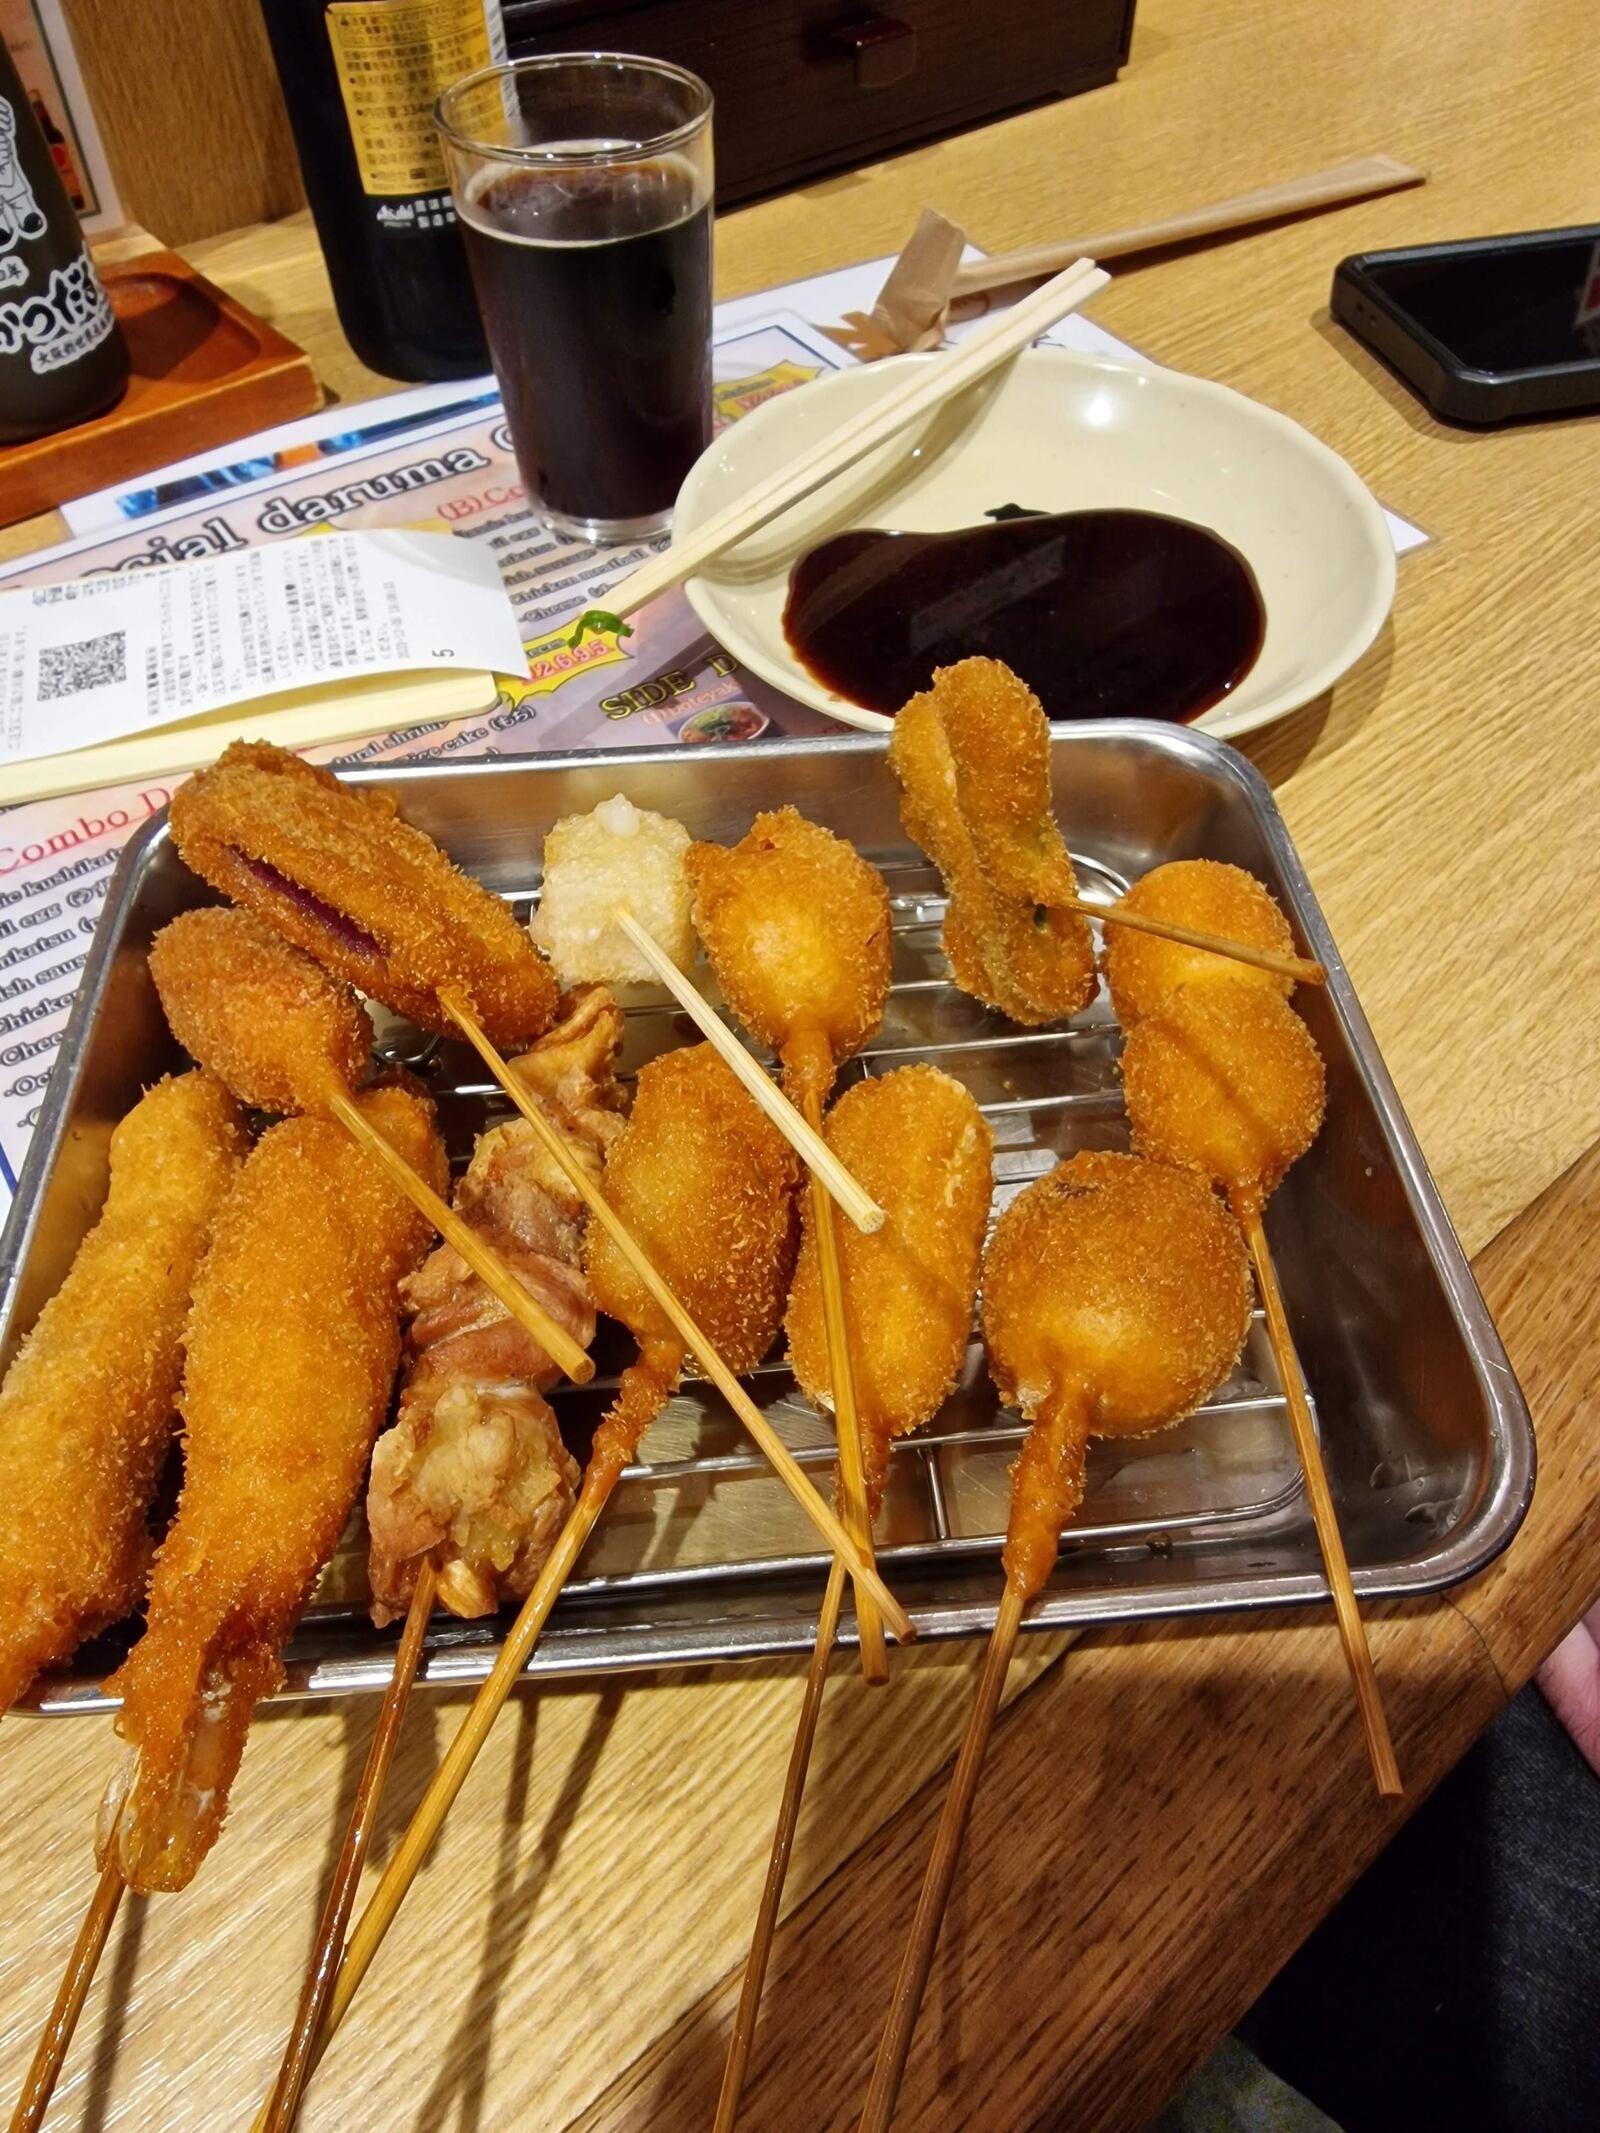 lots of fried food on sticks, various shapes - kushikatsu in osaka Japan